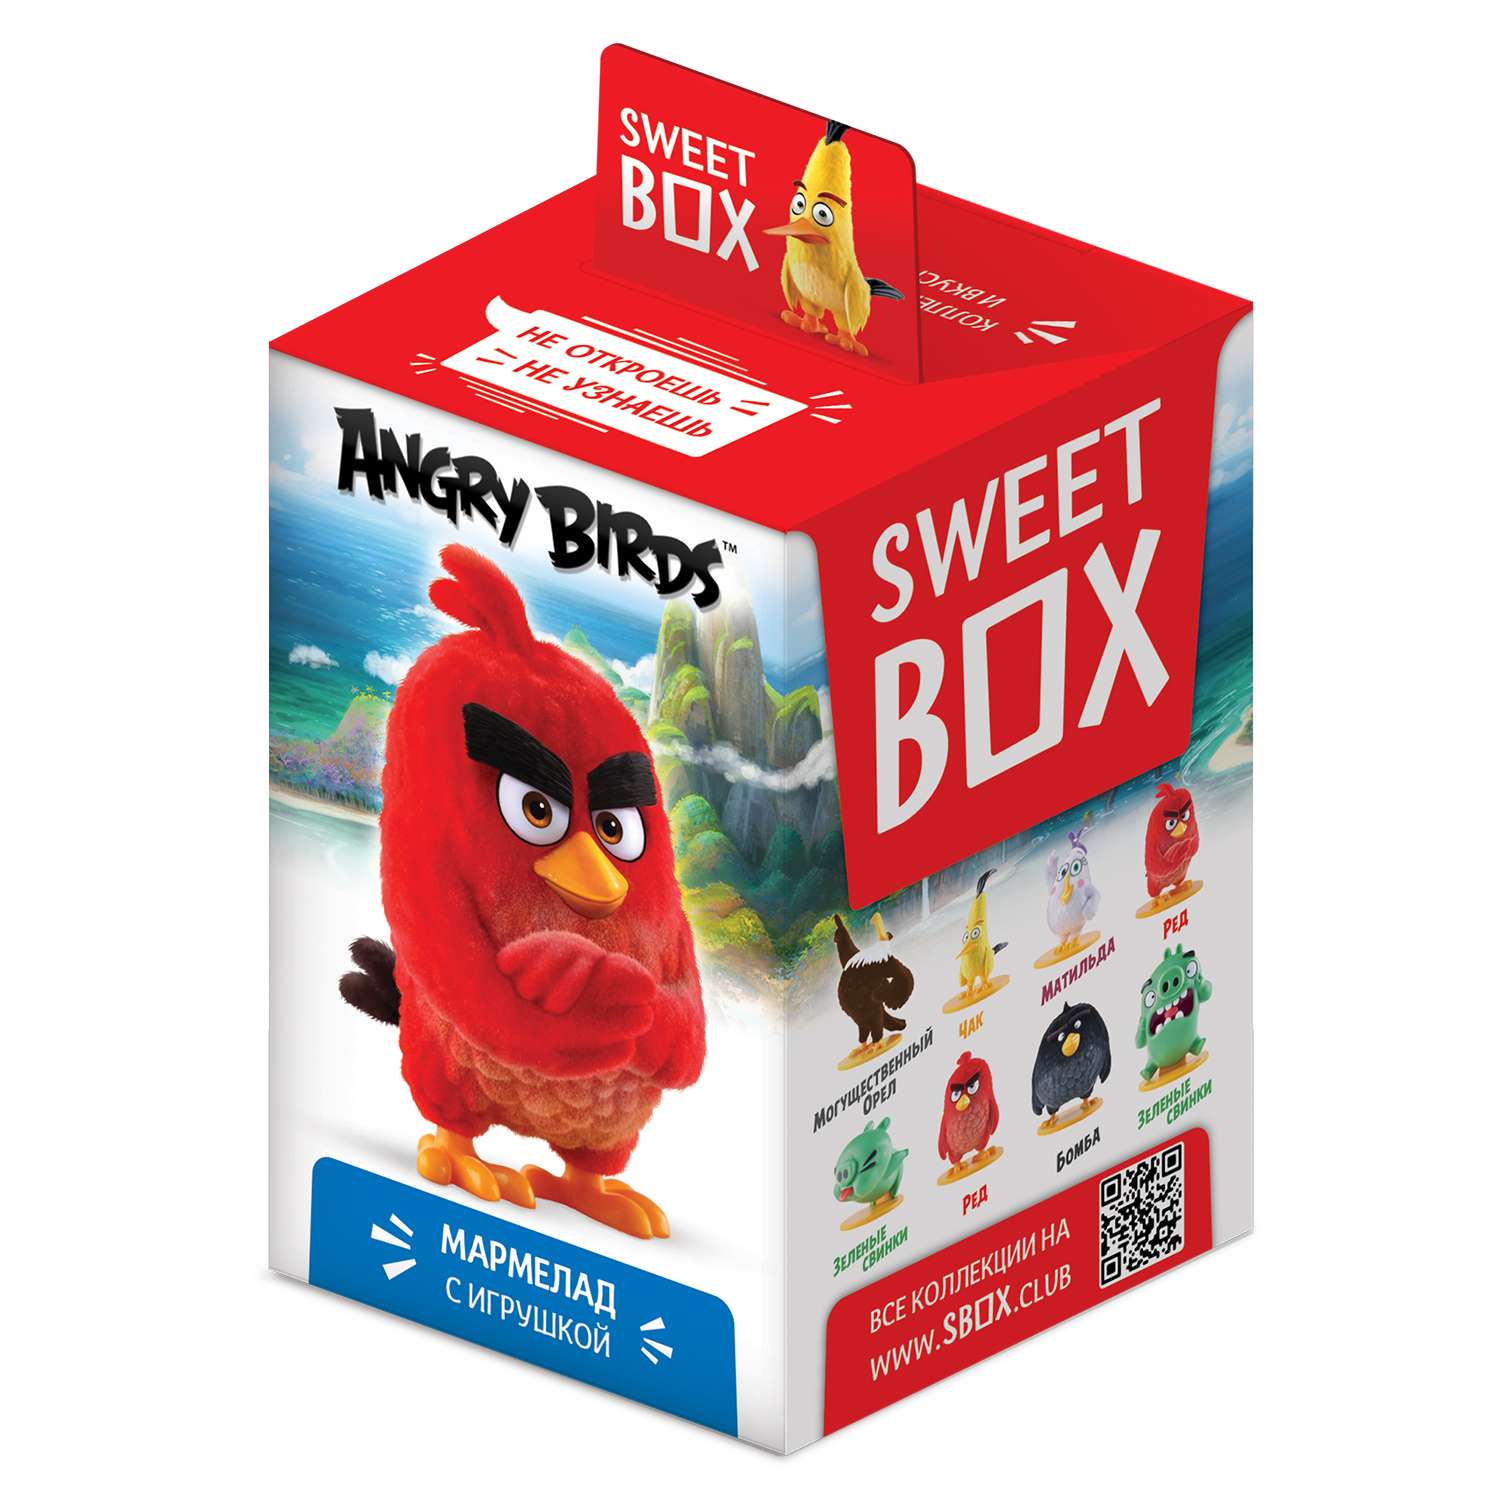 Мармелад Sweet box Angry Birds игрушка в коробке 10г - фото 1